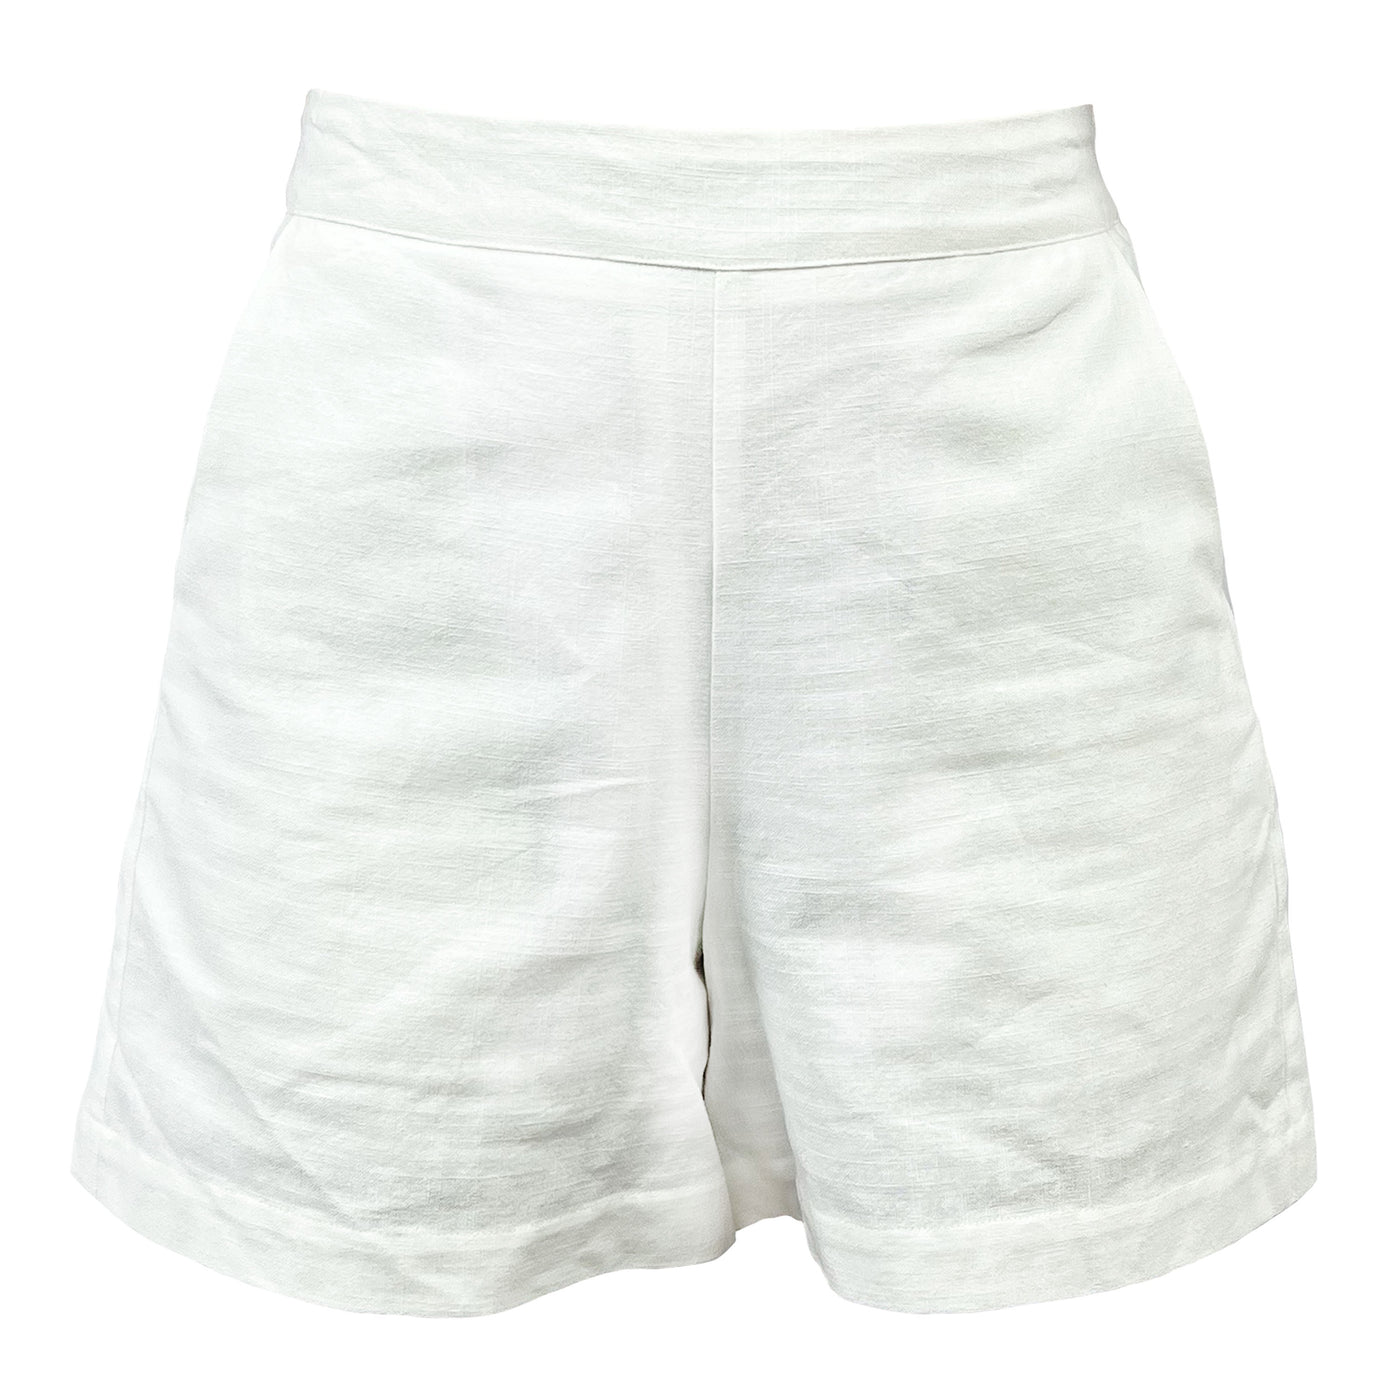 Breezy Palms White Linen Shorts